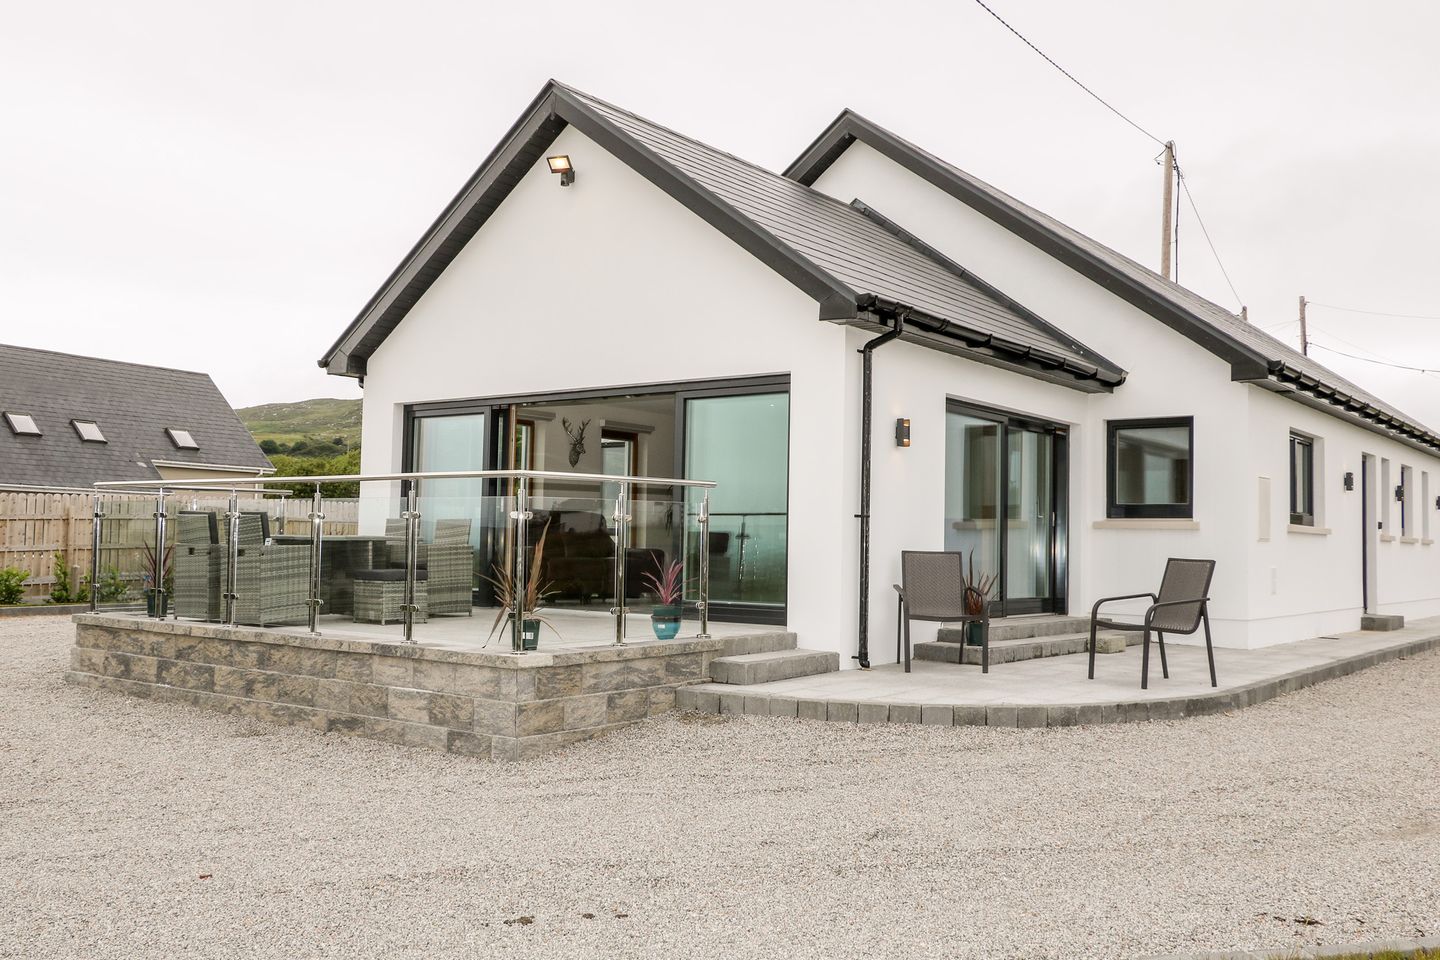 Ref. 1079444 Traeannagh Bay House, Meenacross, Dungloe, Co. Donegal